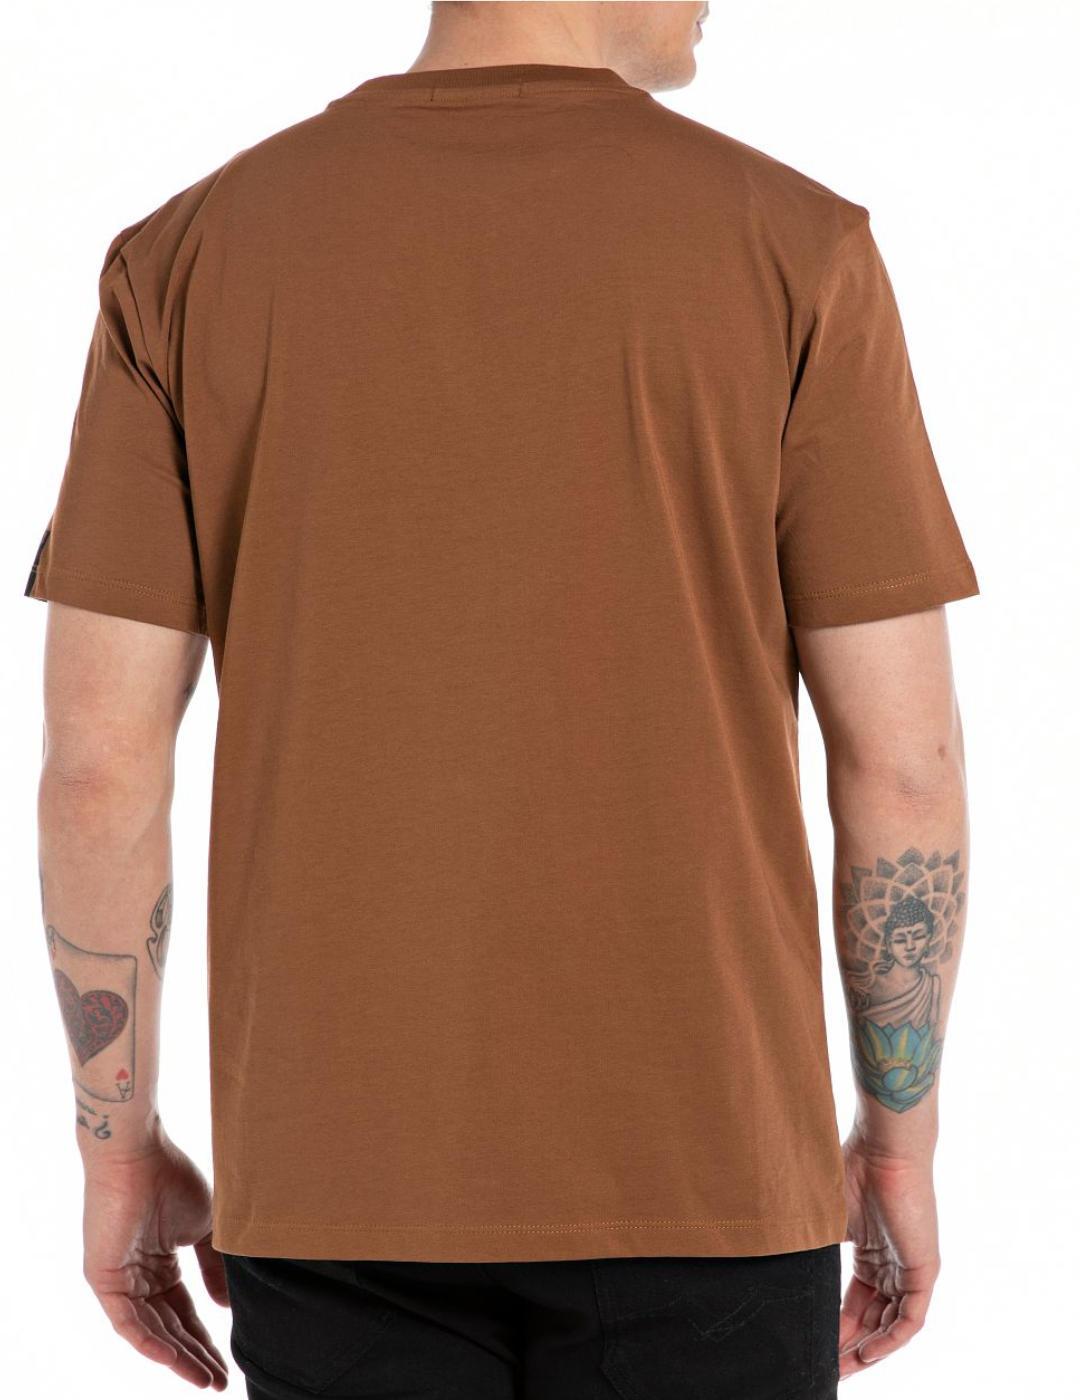 Camiseta Replay marrón manga corta para hombre